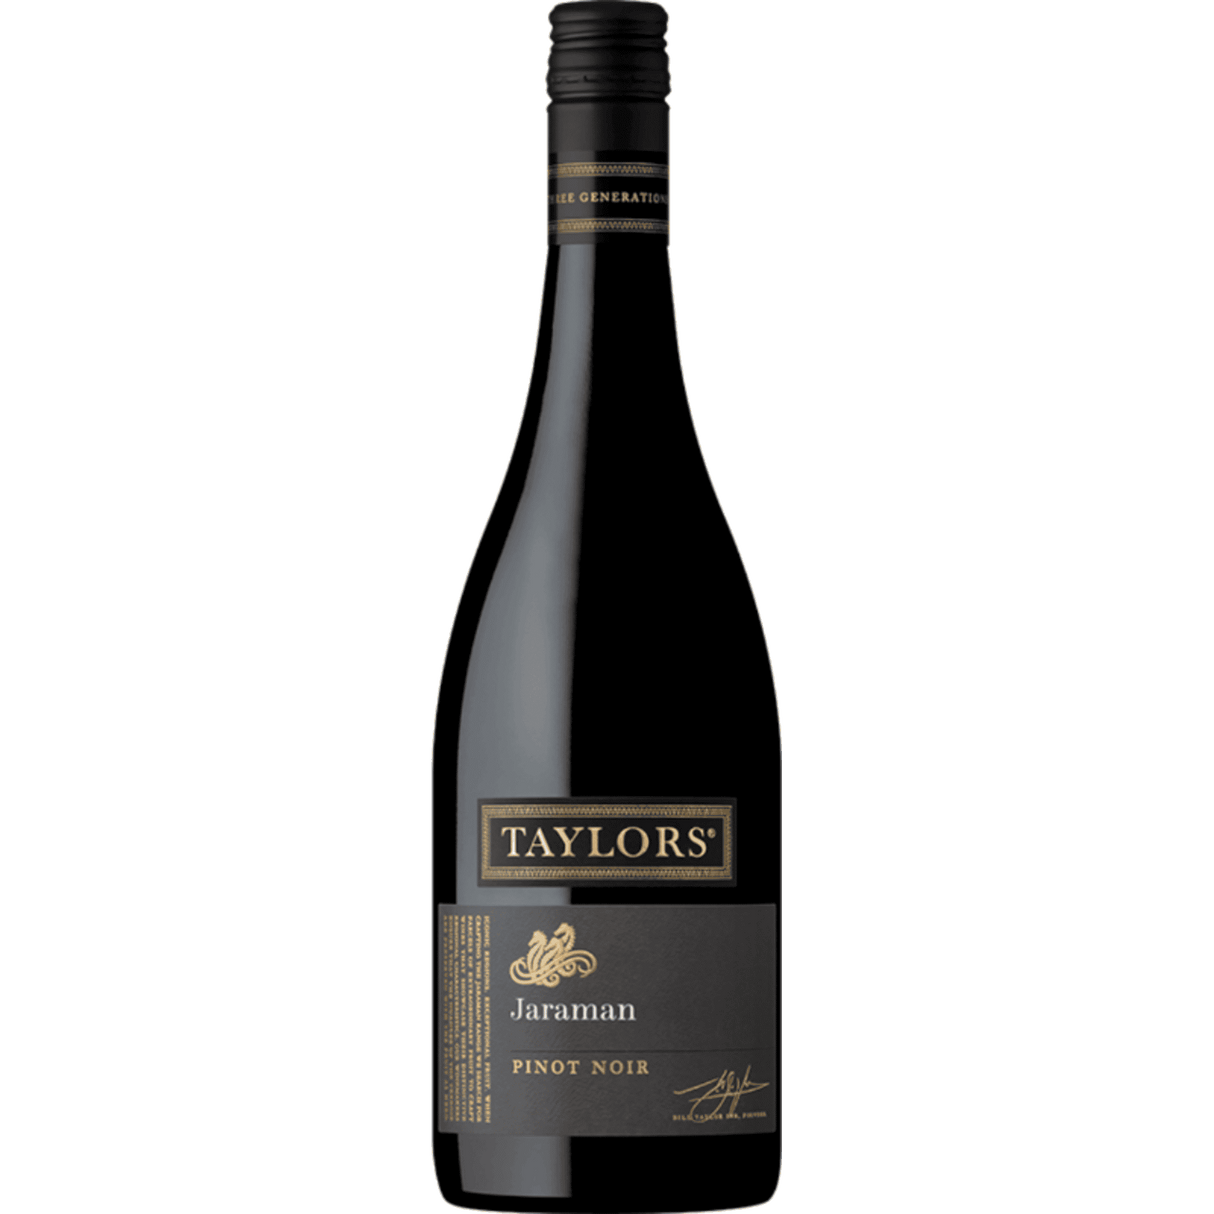 Taylors Jaraman Pinot Noir 750ml